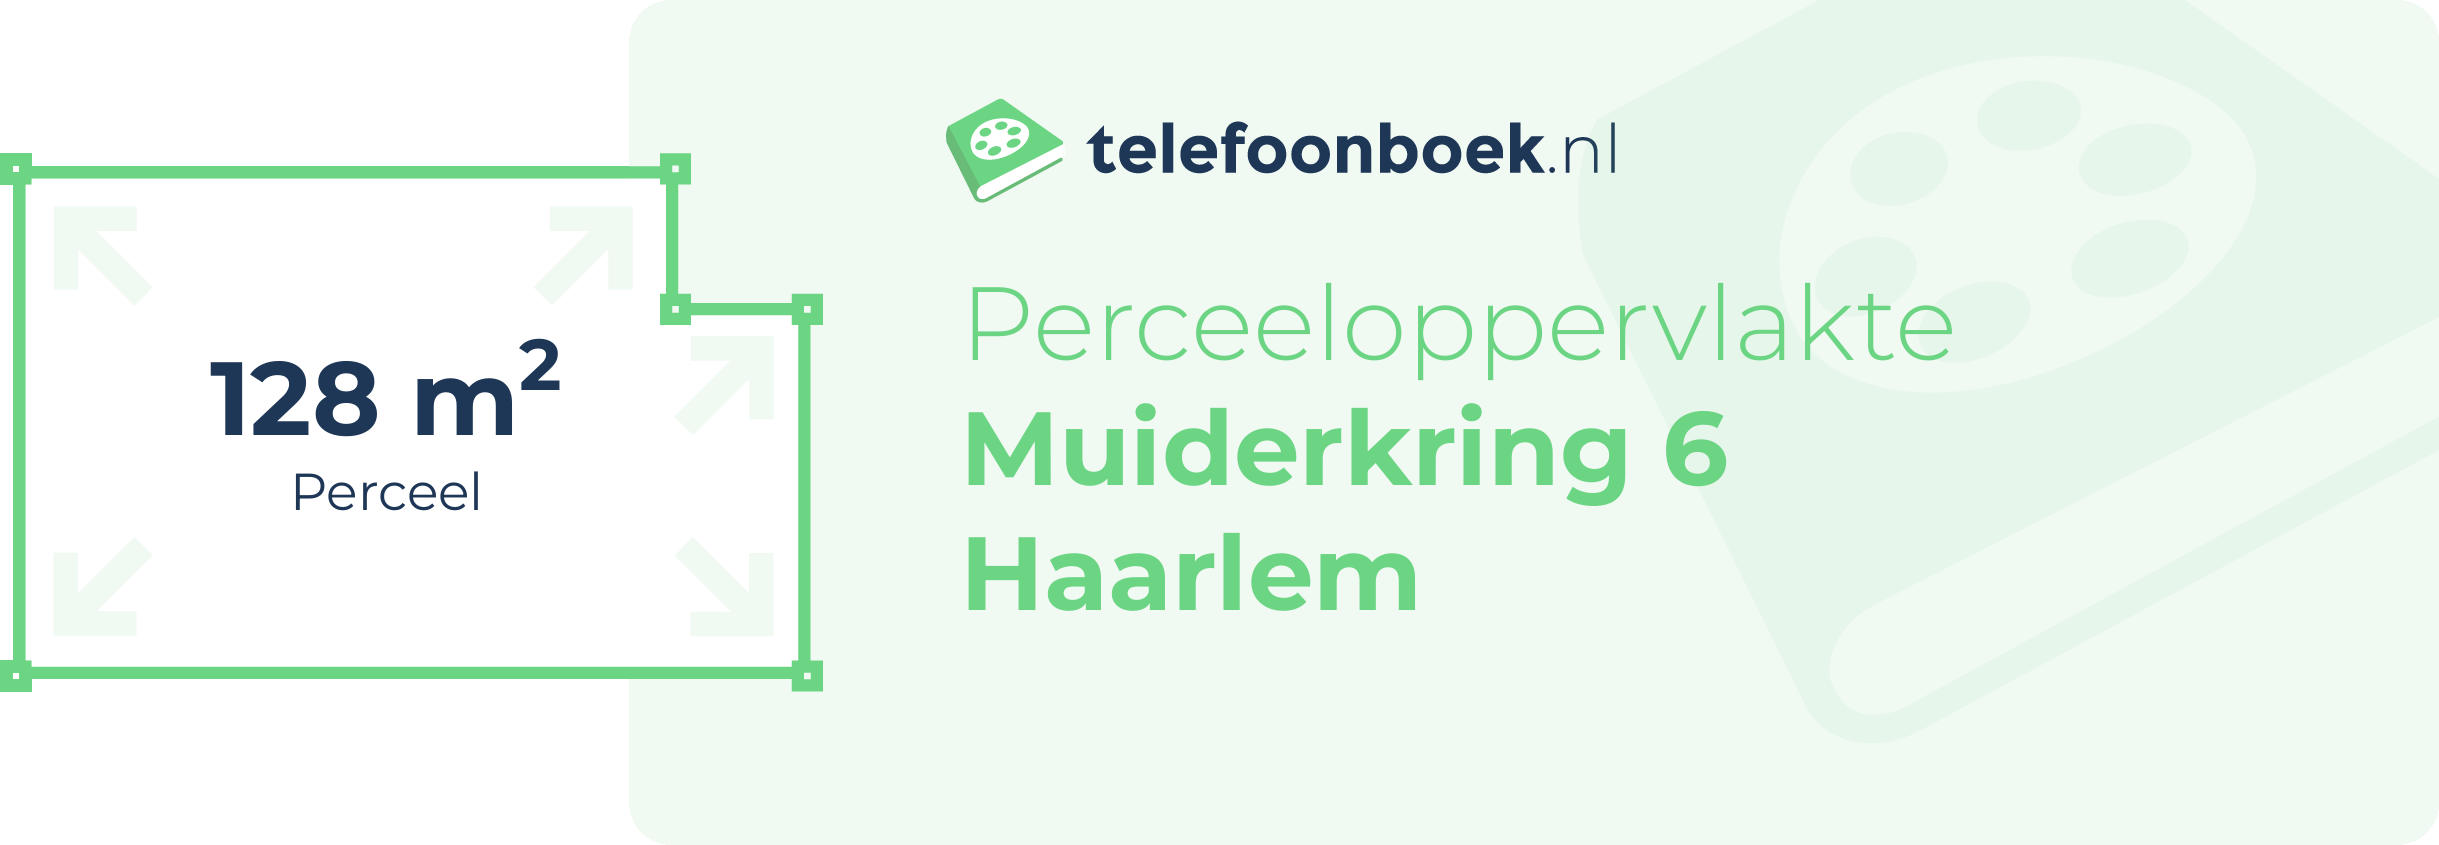 Perceeloppervlakte Muiderkring 6 Haarlem